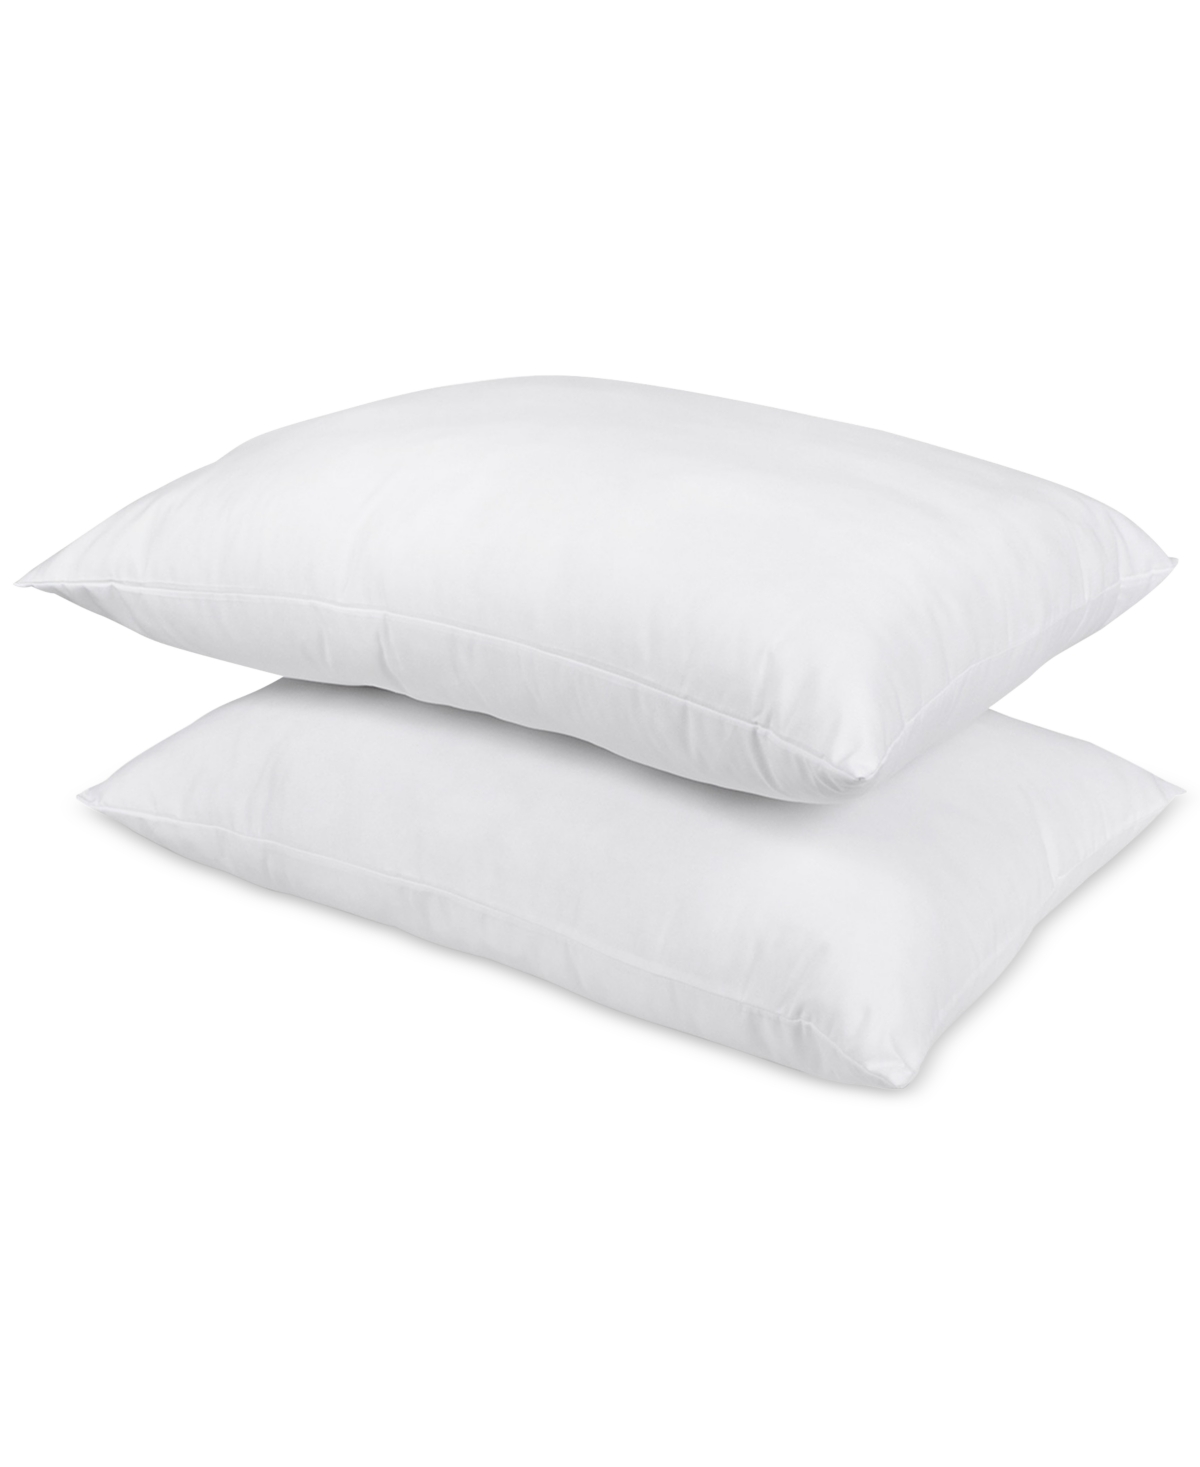 Home Design Down-Alternative 2-Pack Pillows, Standard/Queen, Created for Macys Bedding